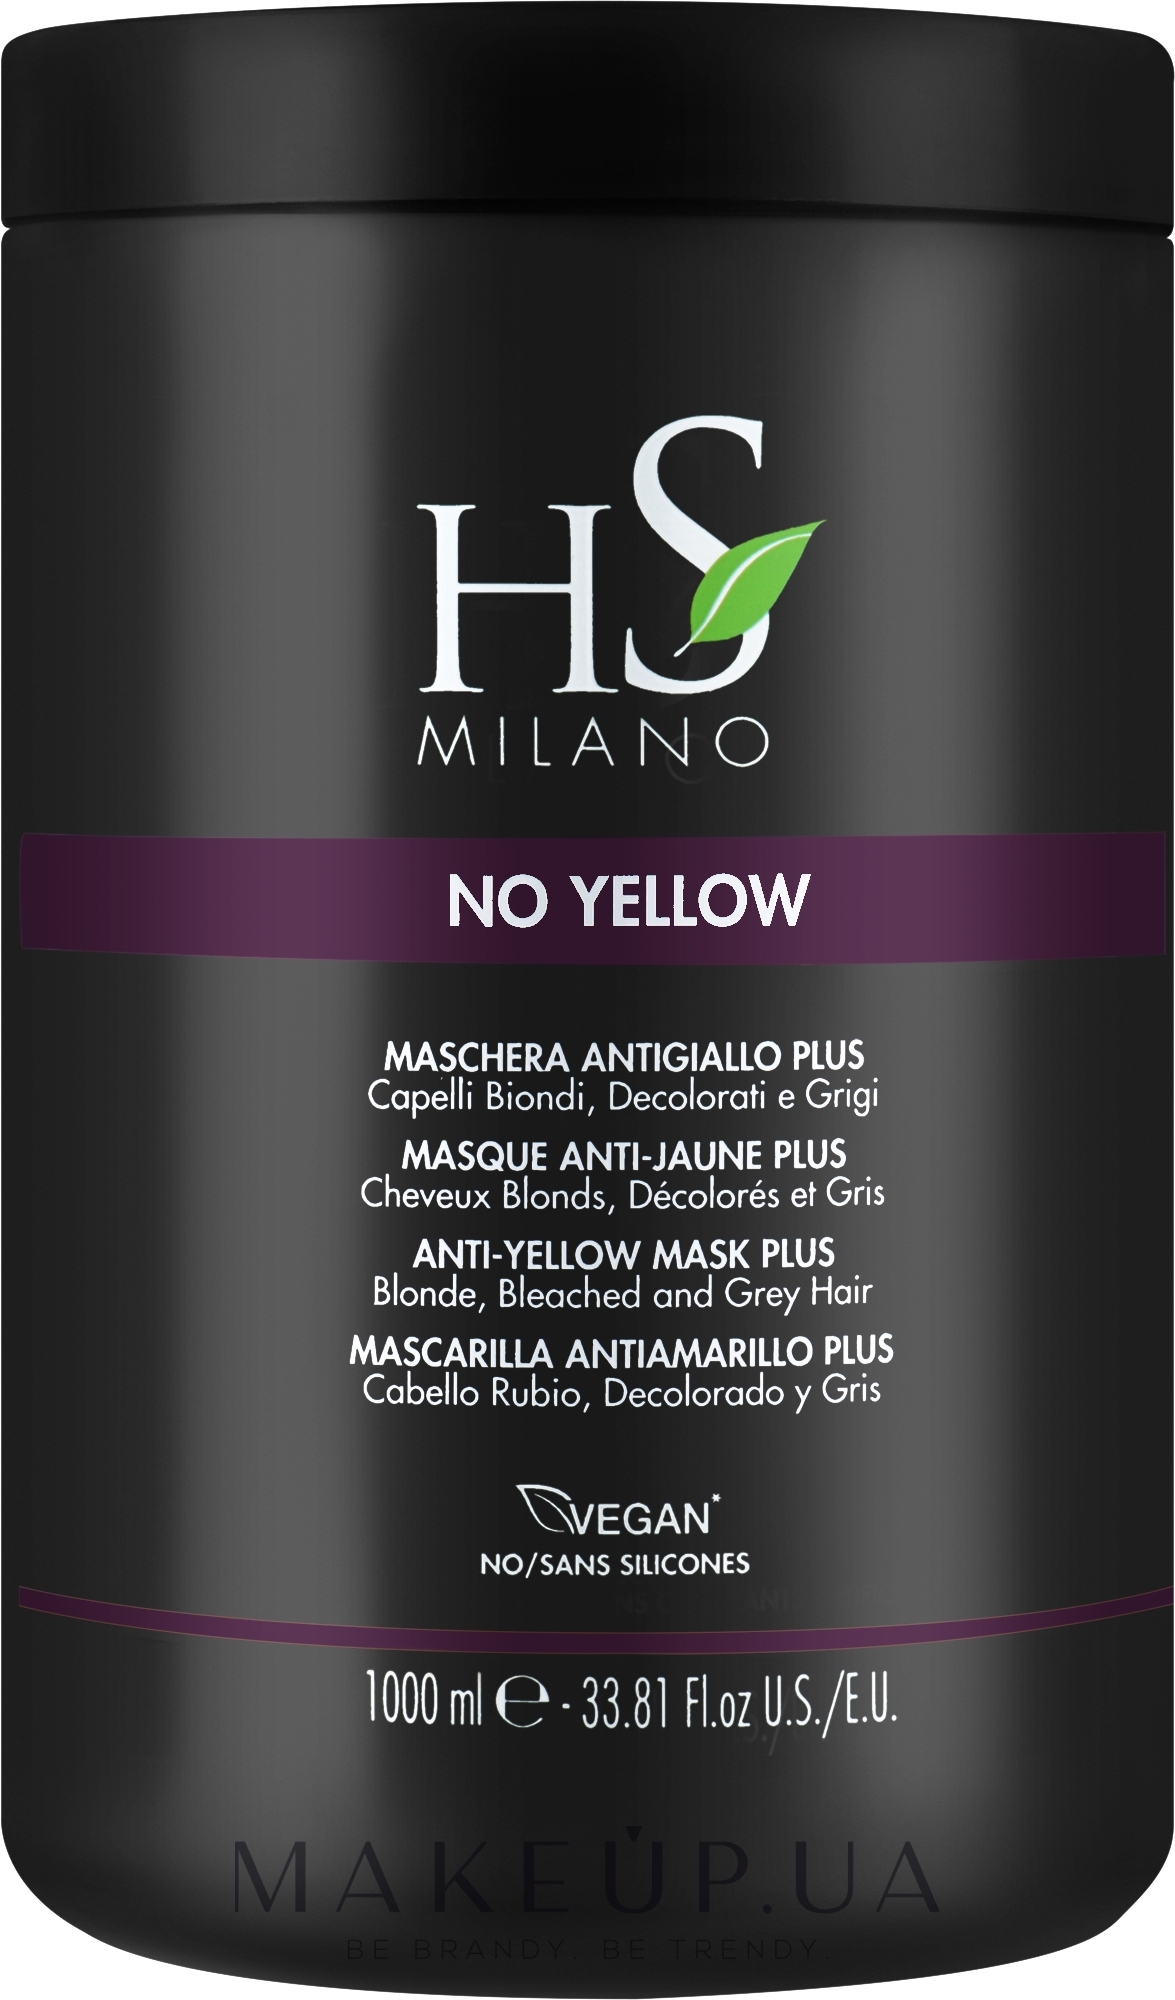 Маска для ухода за светлыми, седыми, обесцвеченными волосами - HS Milano No Yellow Anti-Yellow Mask Plus  — фото 1000ml